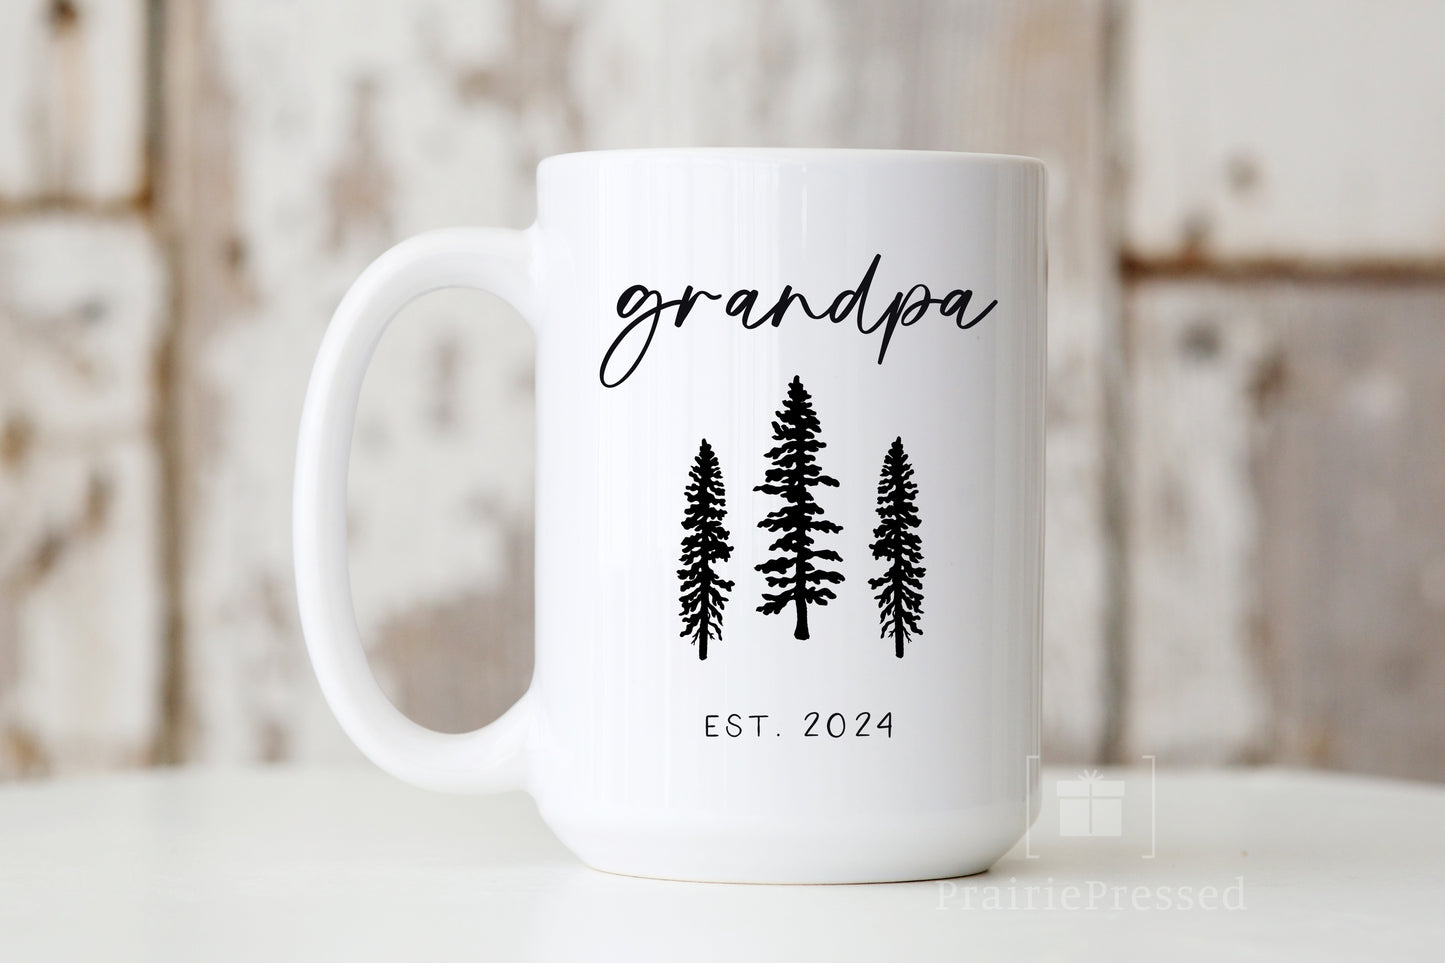 New Grandpa EST 2024 Ceramic Gift Mug